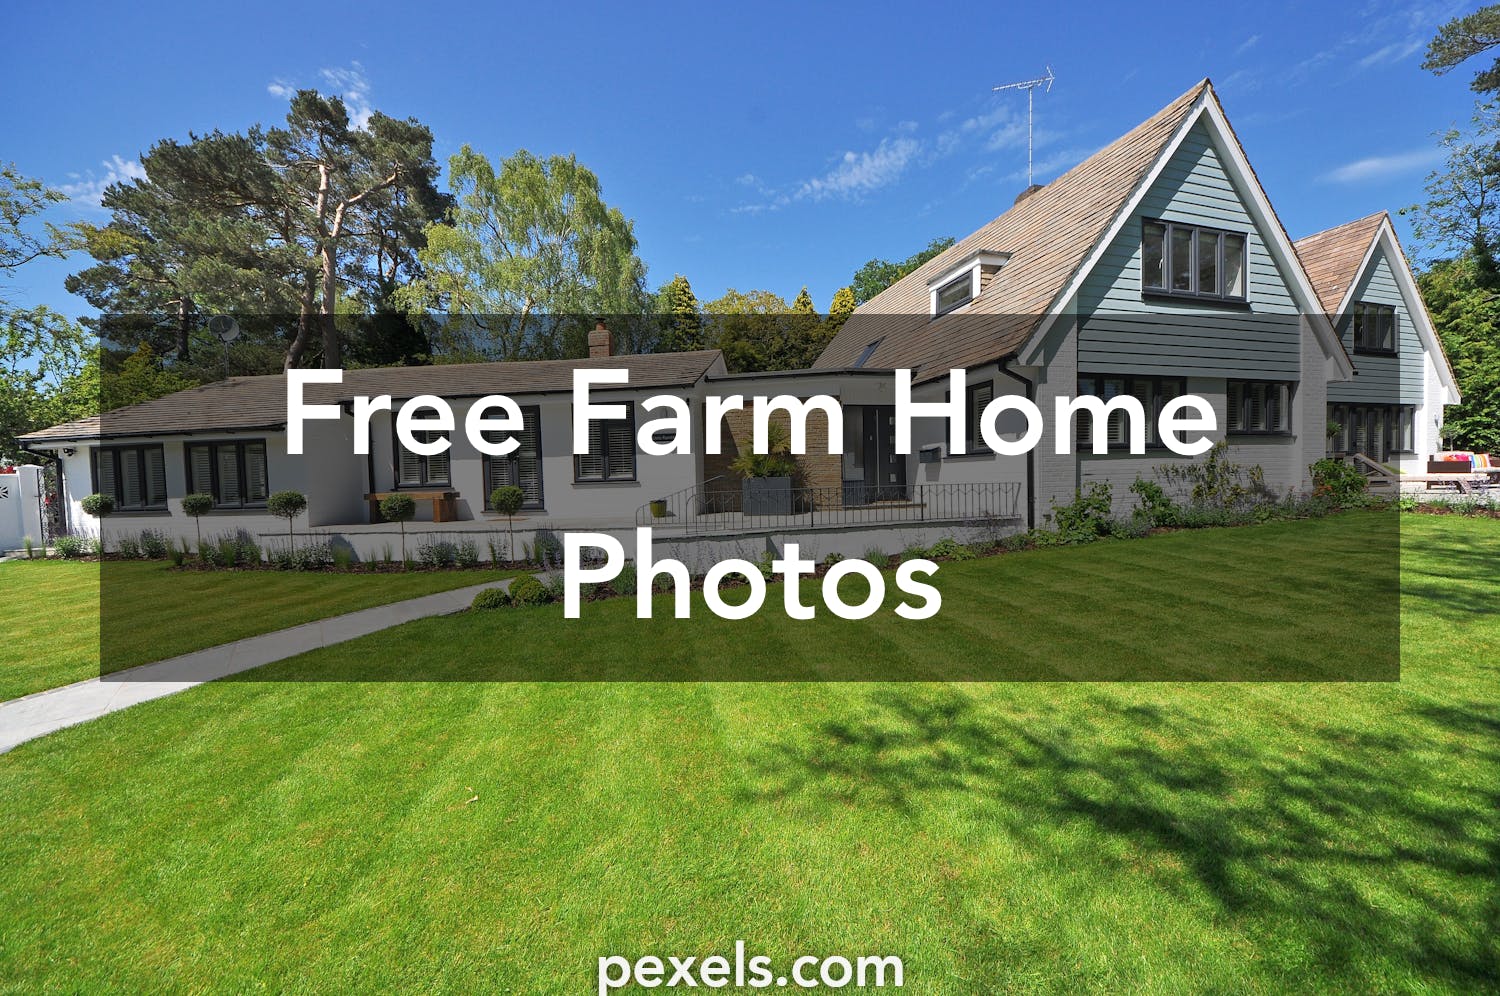 Interesting Farm  Home Photos  Pexels   Free Stock Photos